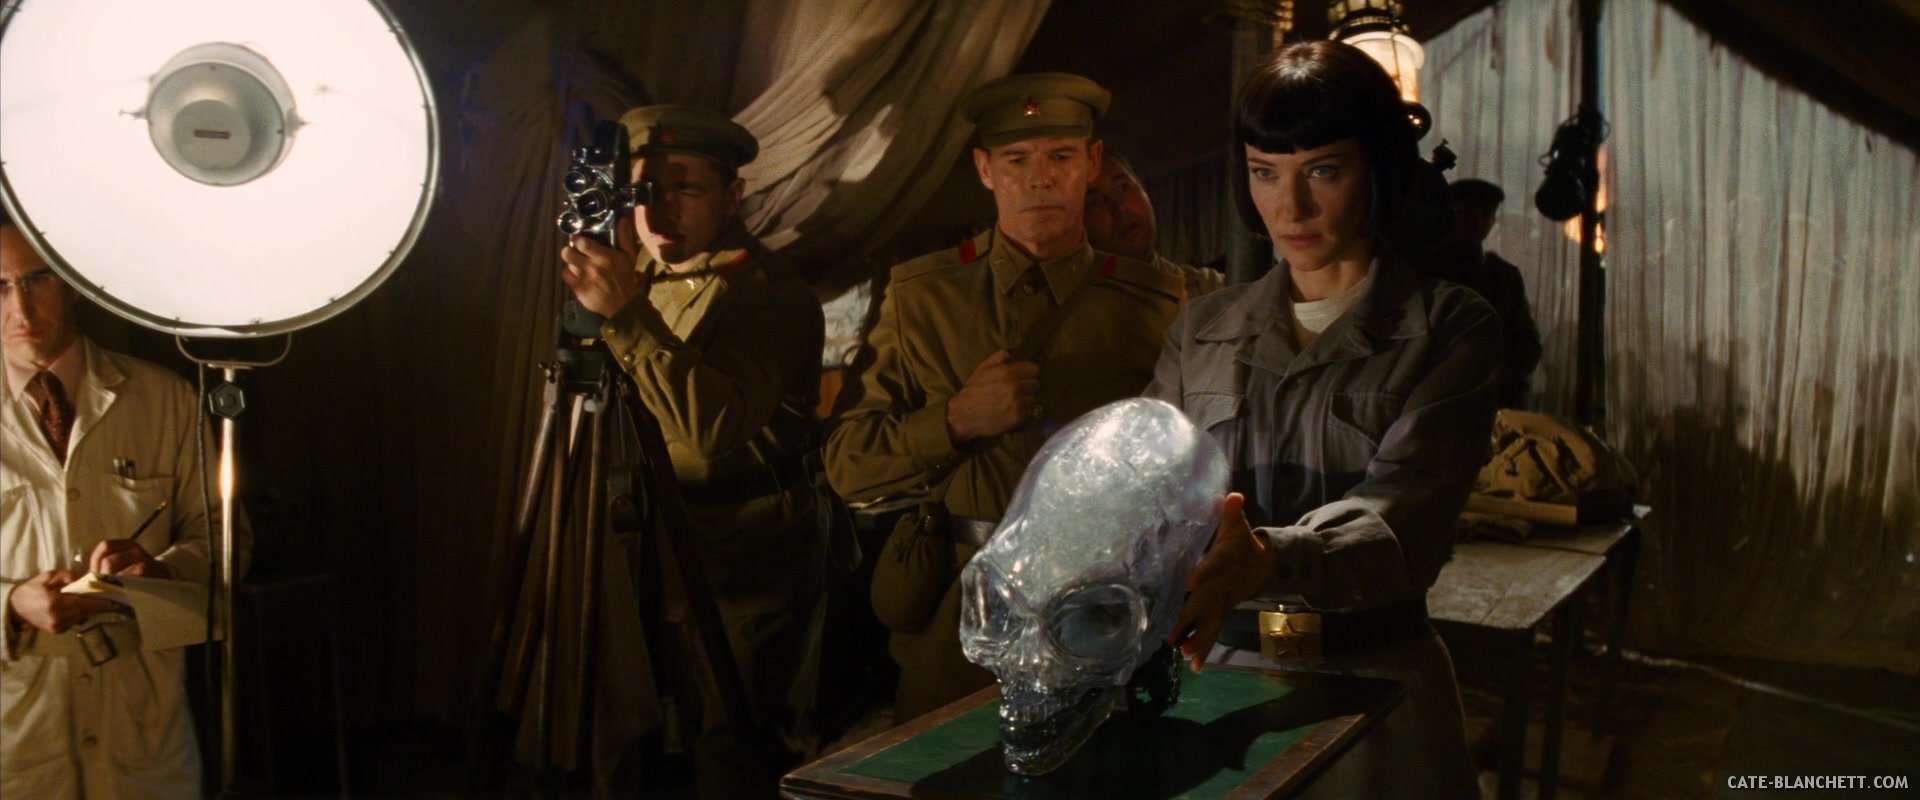 Indiana-Jones-And-The-Kingdom-Of-The-Crystal-Skull-290.jpg